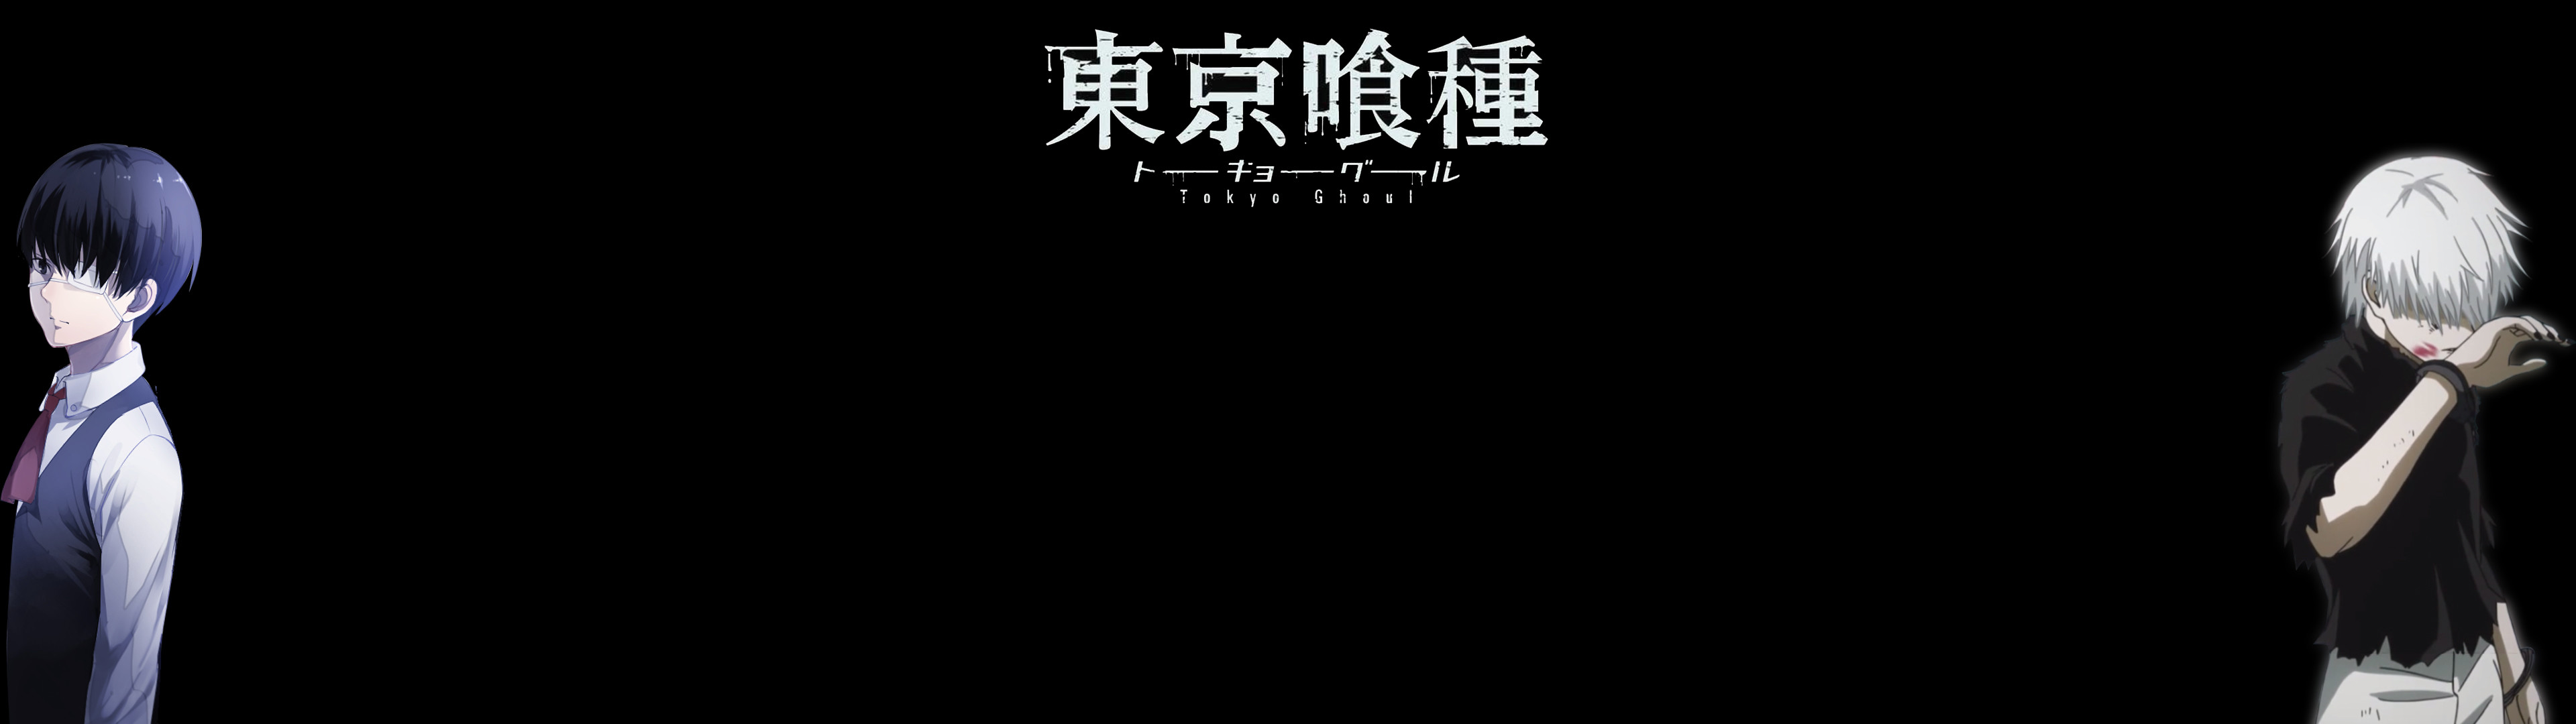 kaneki wallpaper,negro,texto,fuente,oscuridad,ligero